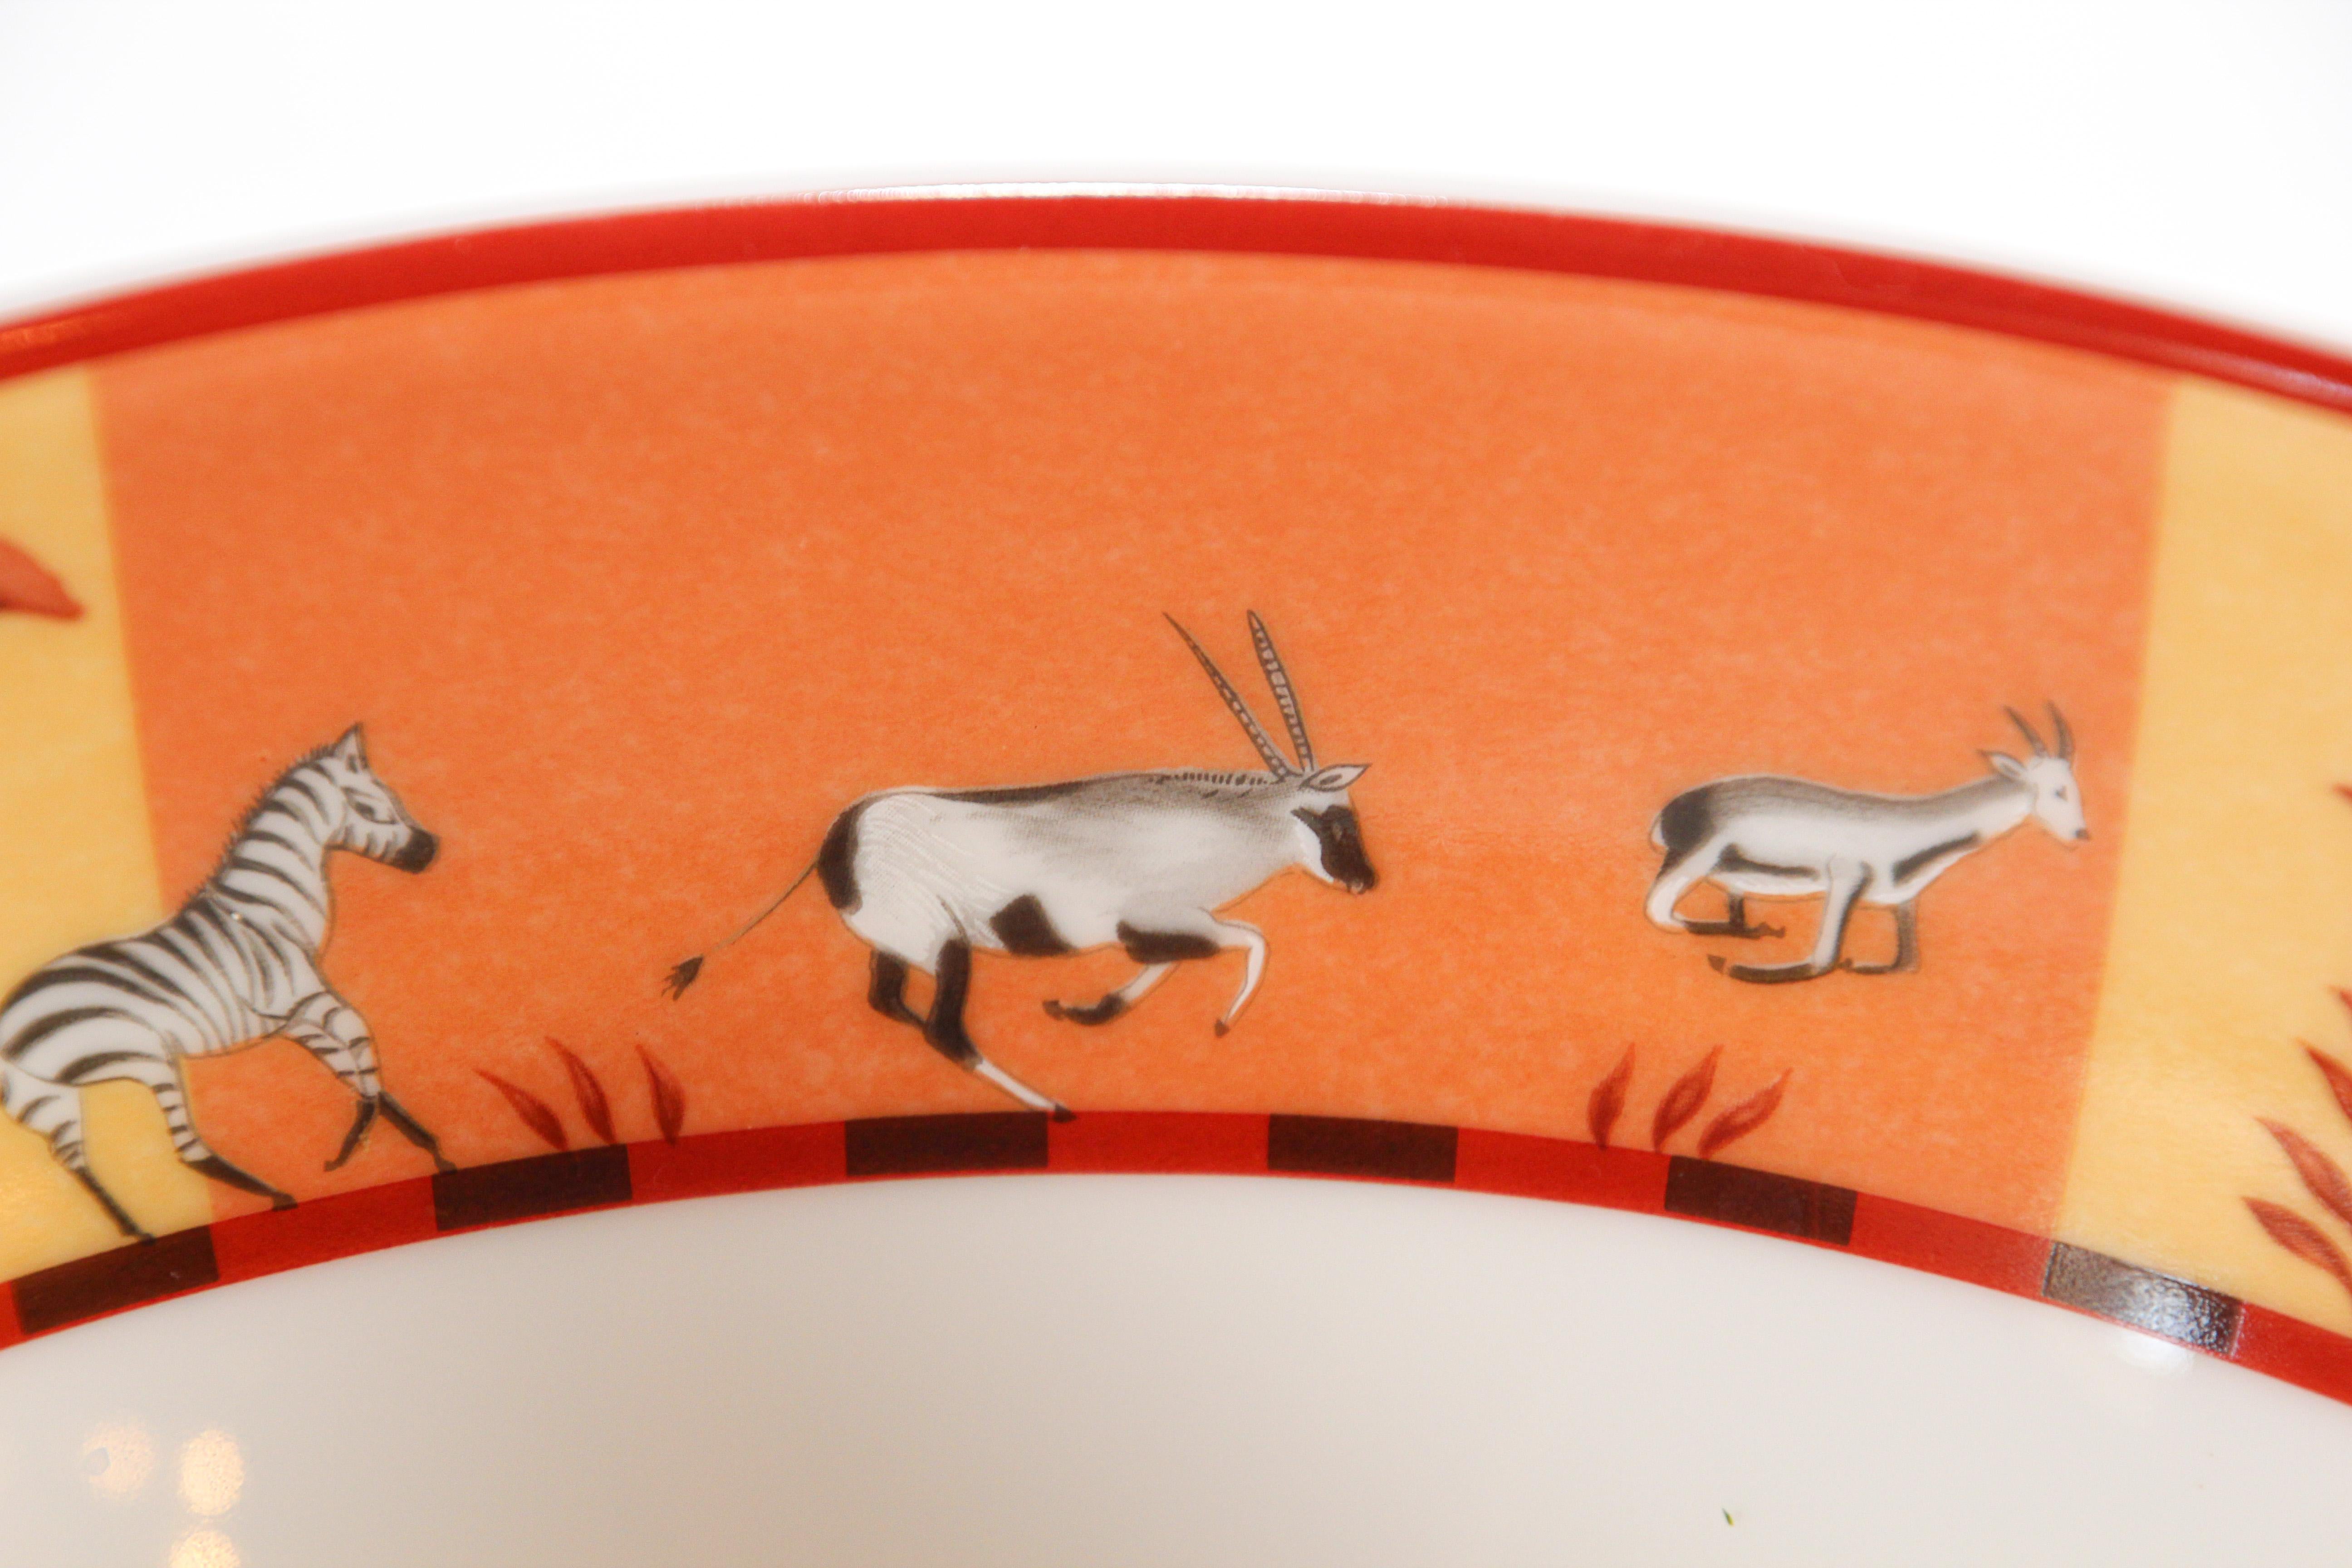 Hermès Africa Orange Large Porcelain Salad Bowl with Safari Design 2